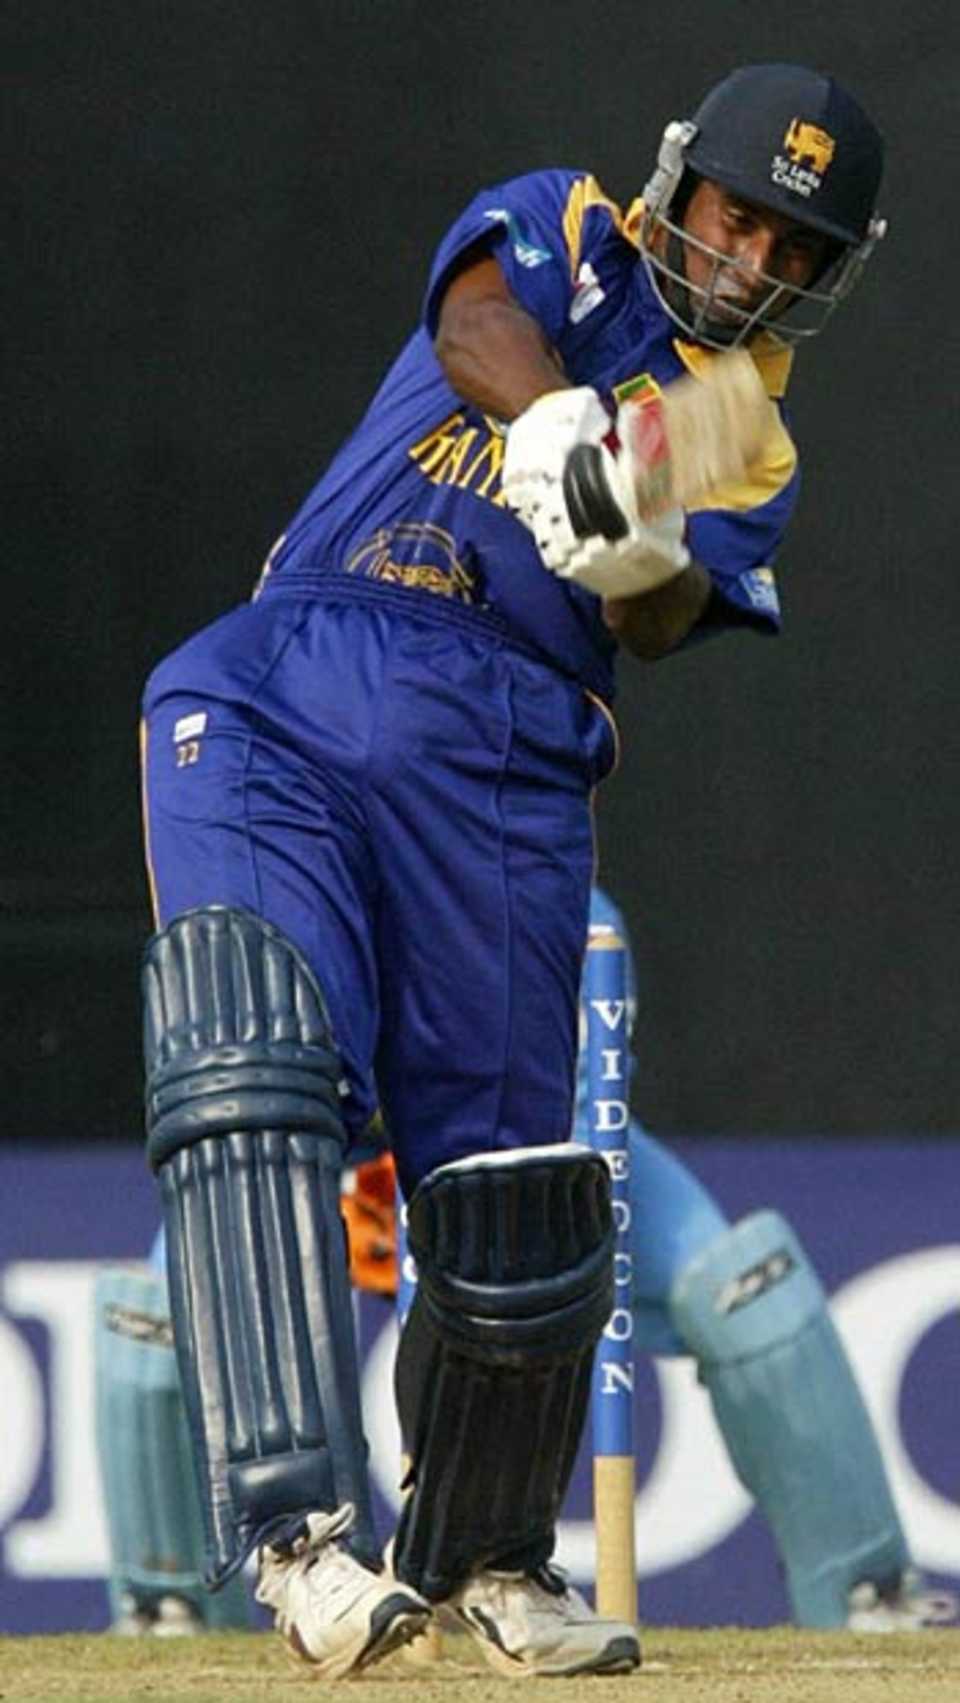 Chaminda Vaas' unbeaten 37 added some respectability to the Sri Lankan score, India v Sri Lanka, Videocon Cup, 1st ODI, Nagpur, October 25, 2005